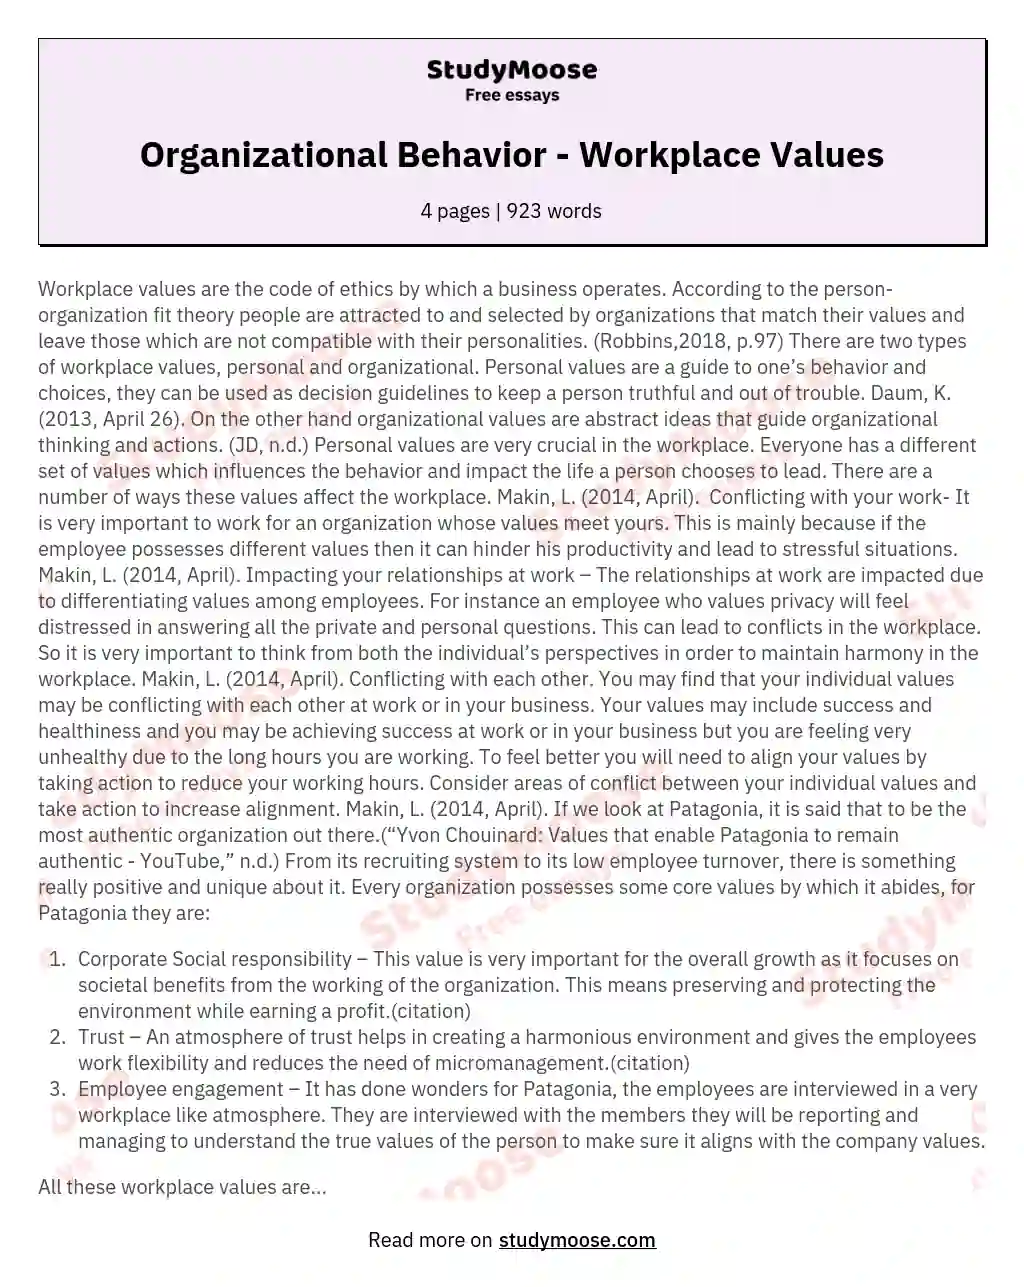 Organizational Behavior - Workplace Values